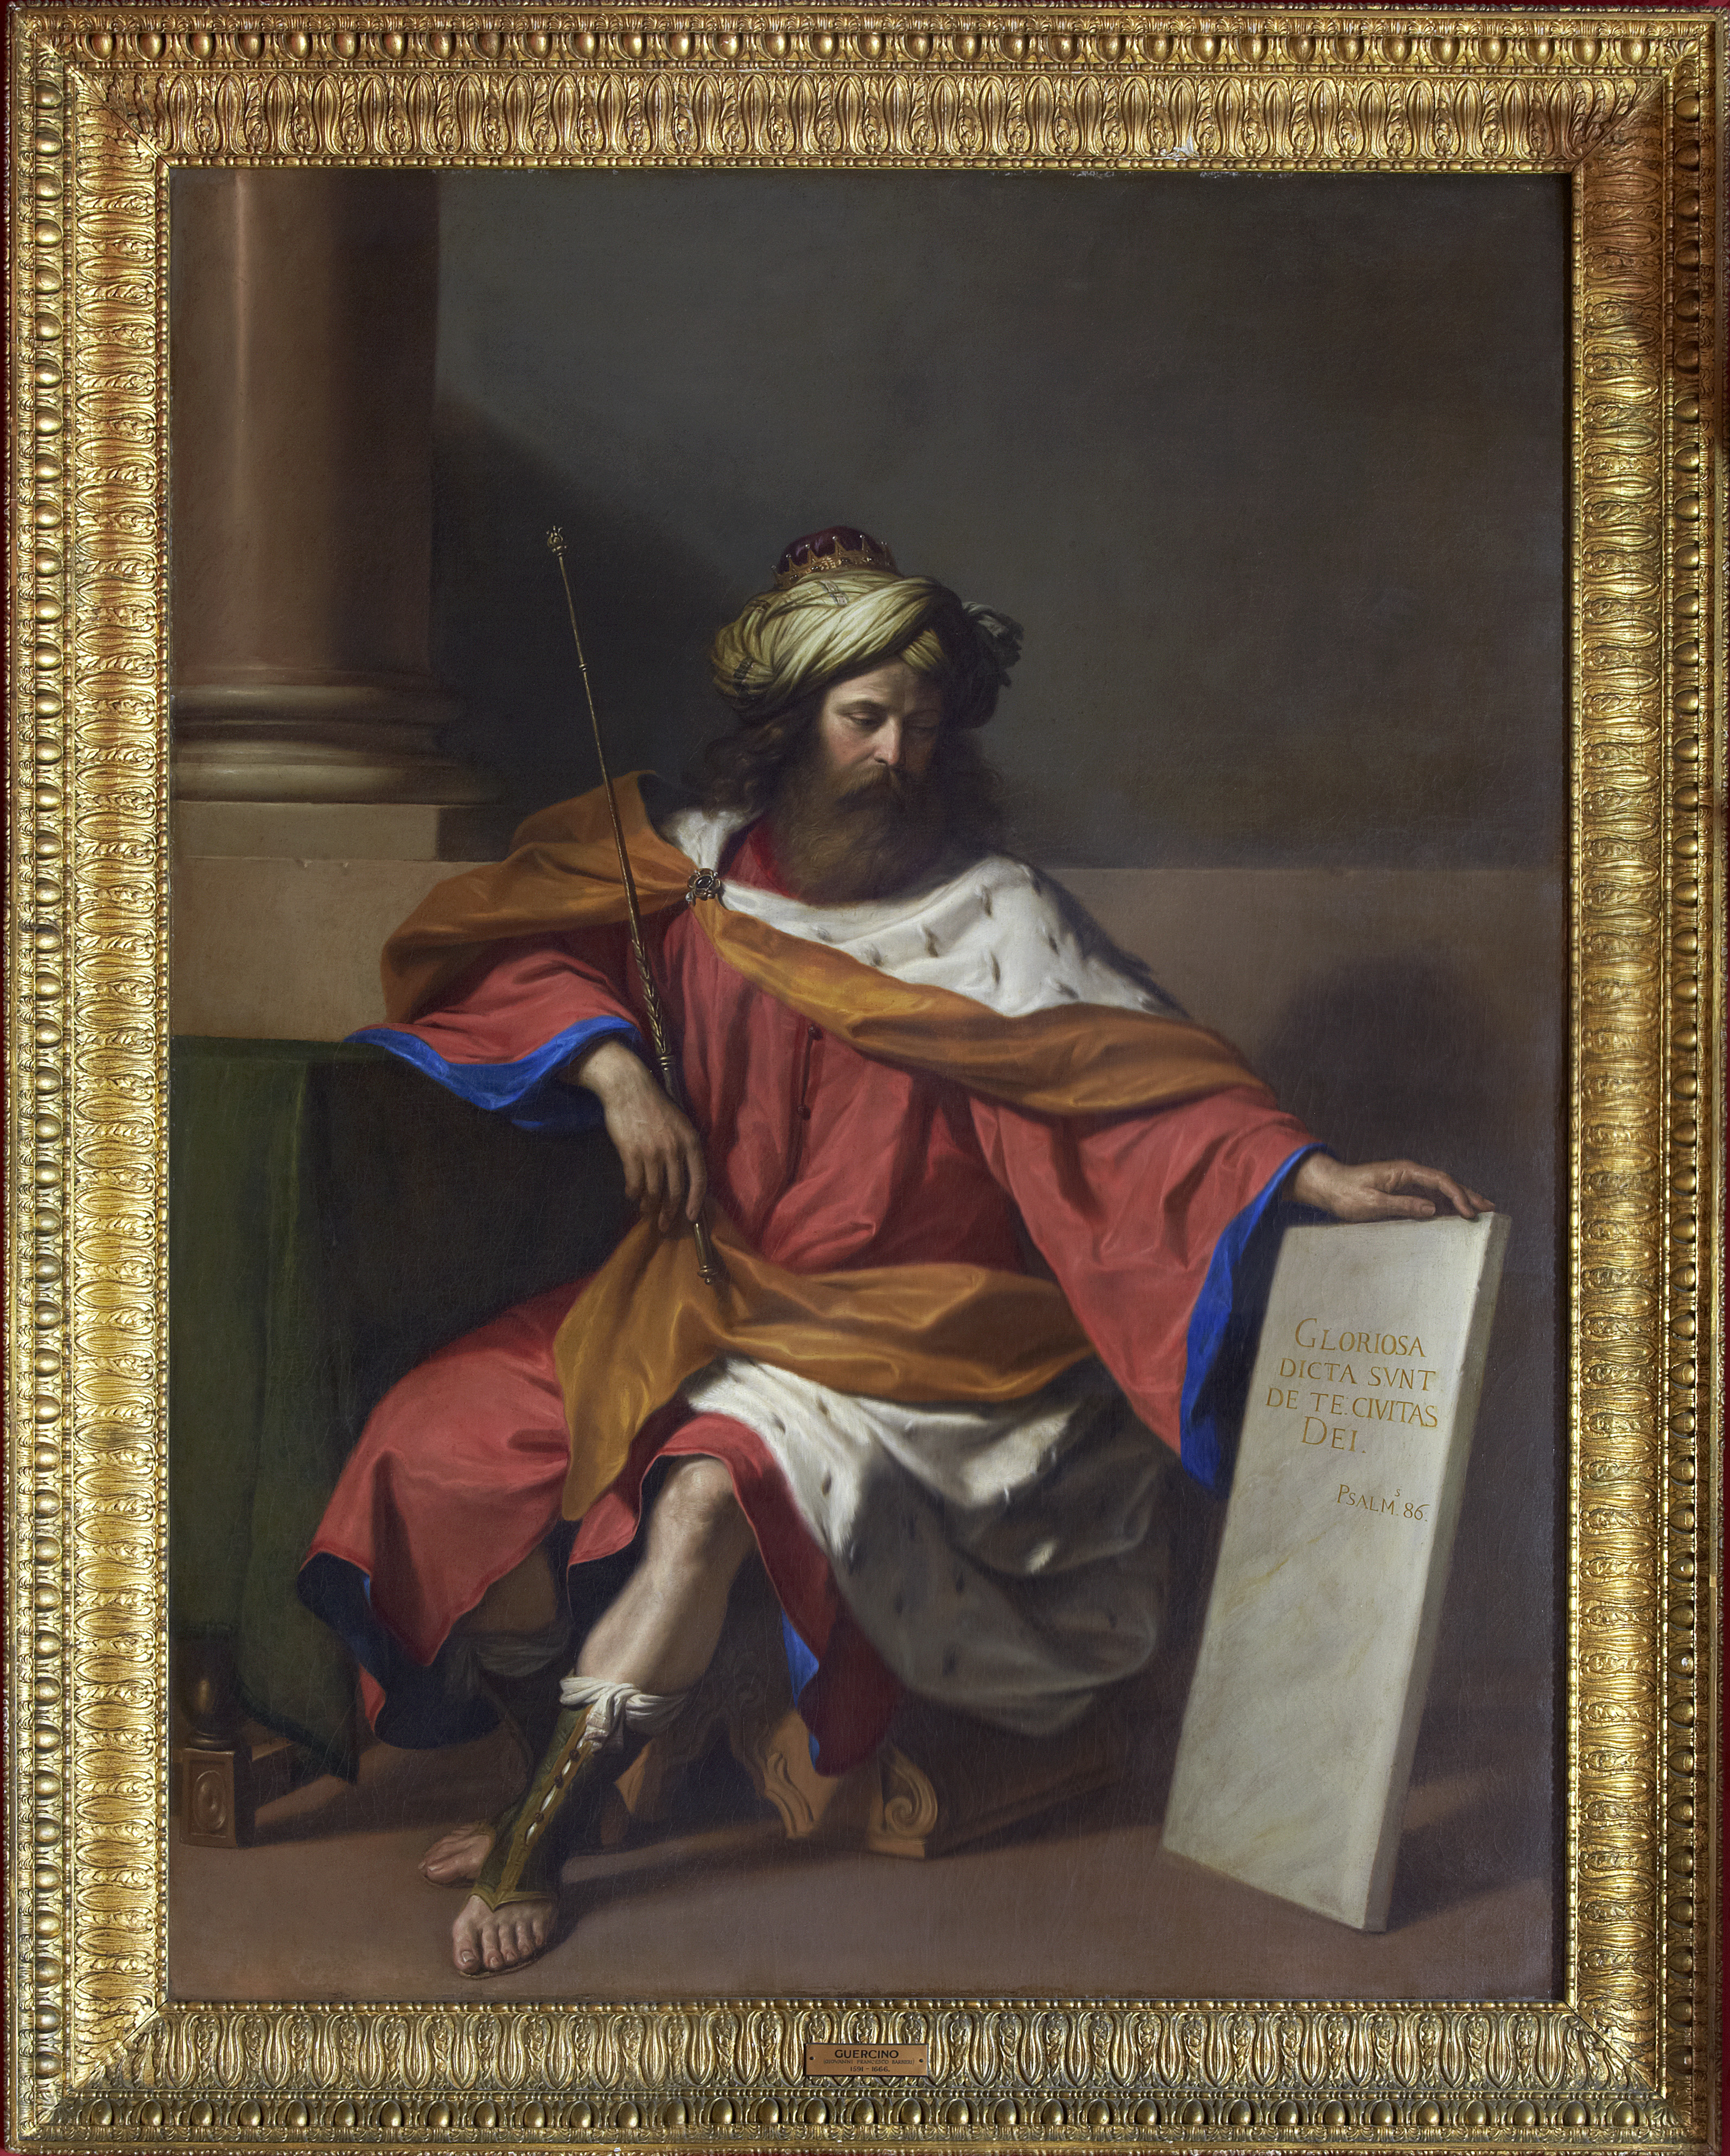 Guercino's painting King David